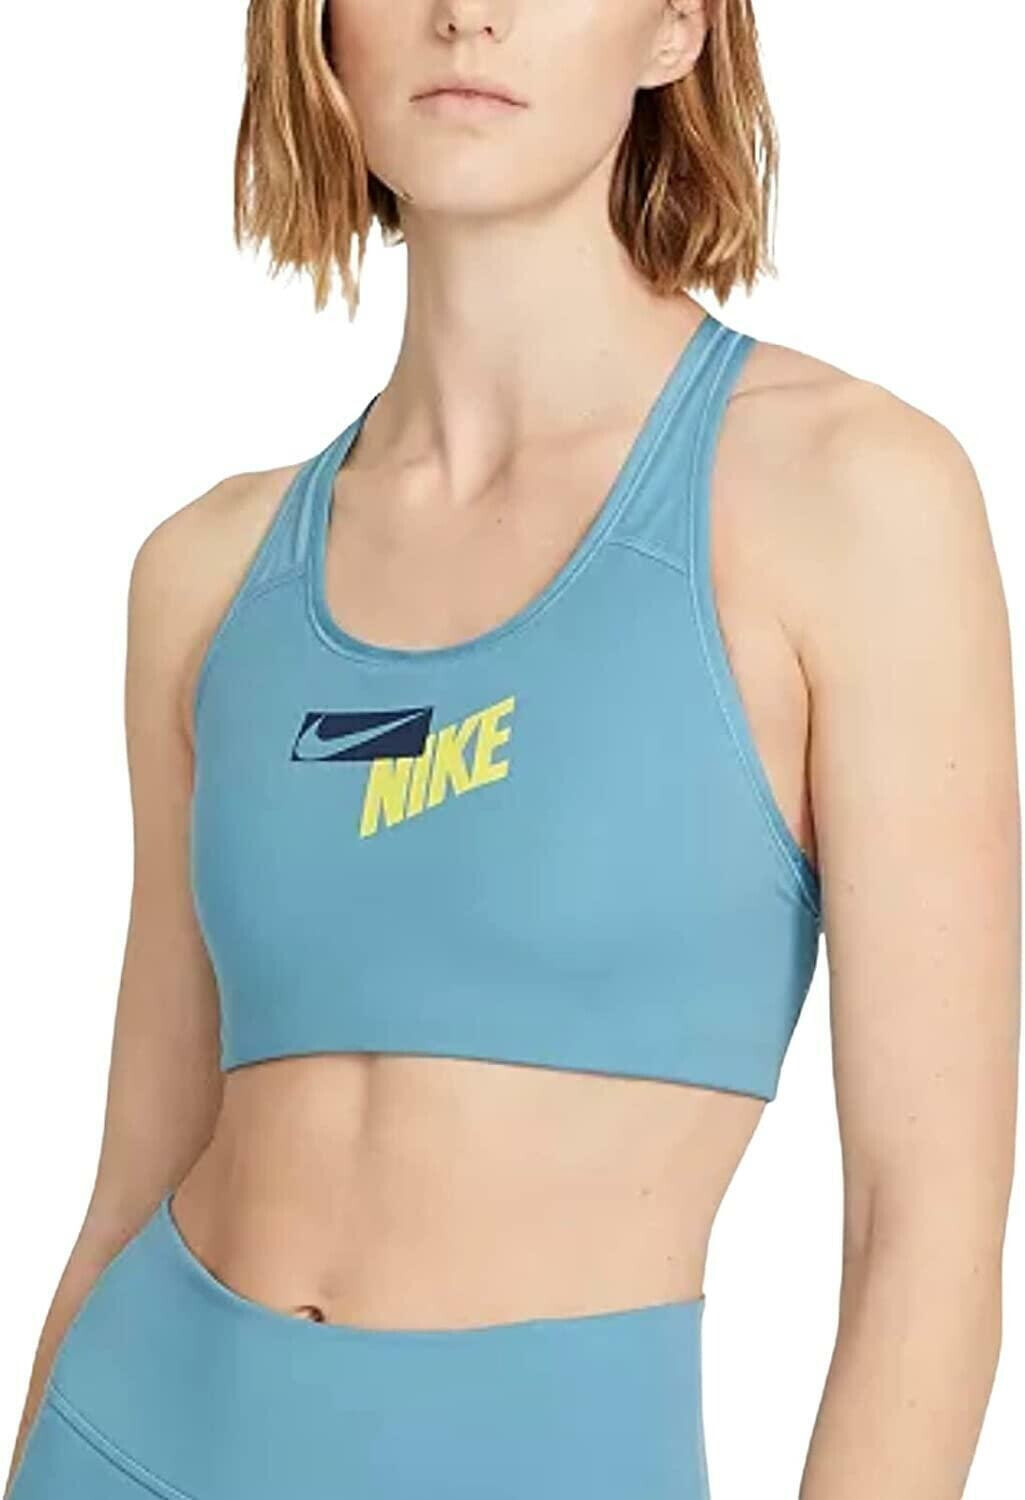 Nike 280005 Women's Sports Bra (Cerulean/Midnight Navy/Midnight Navy, Size Small